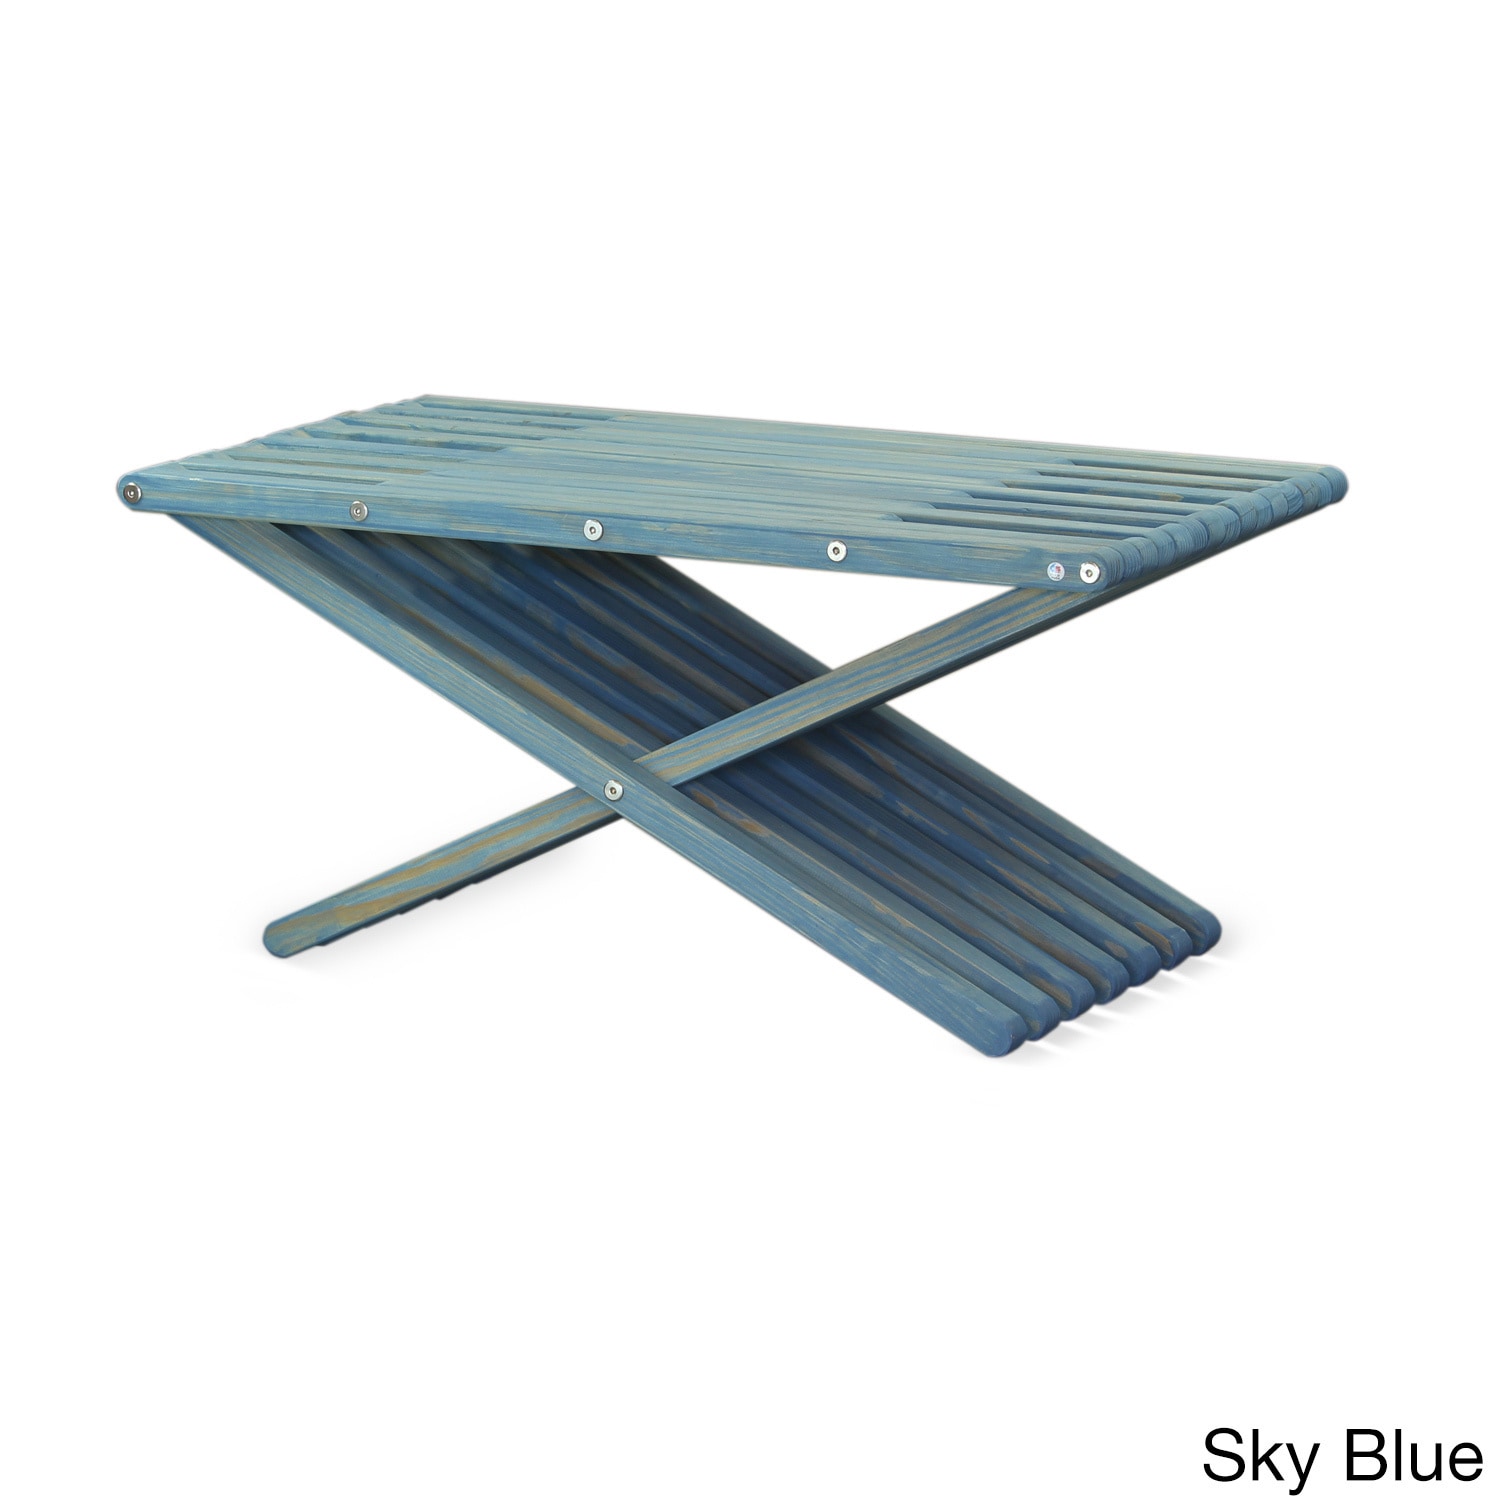 GloDea Eco Friendly Wood Coffee Table 20 x 36 by  Sky Blue - image 1 of 5